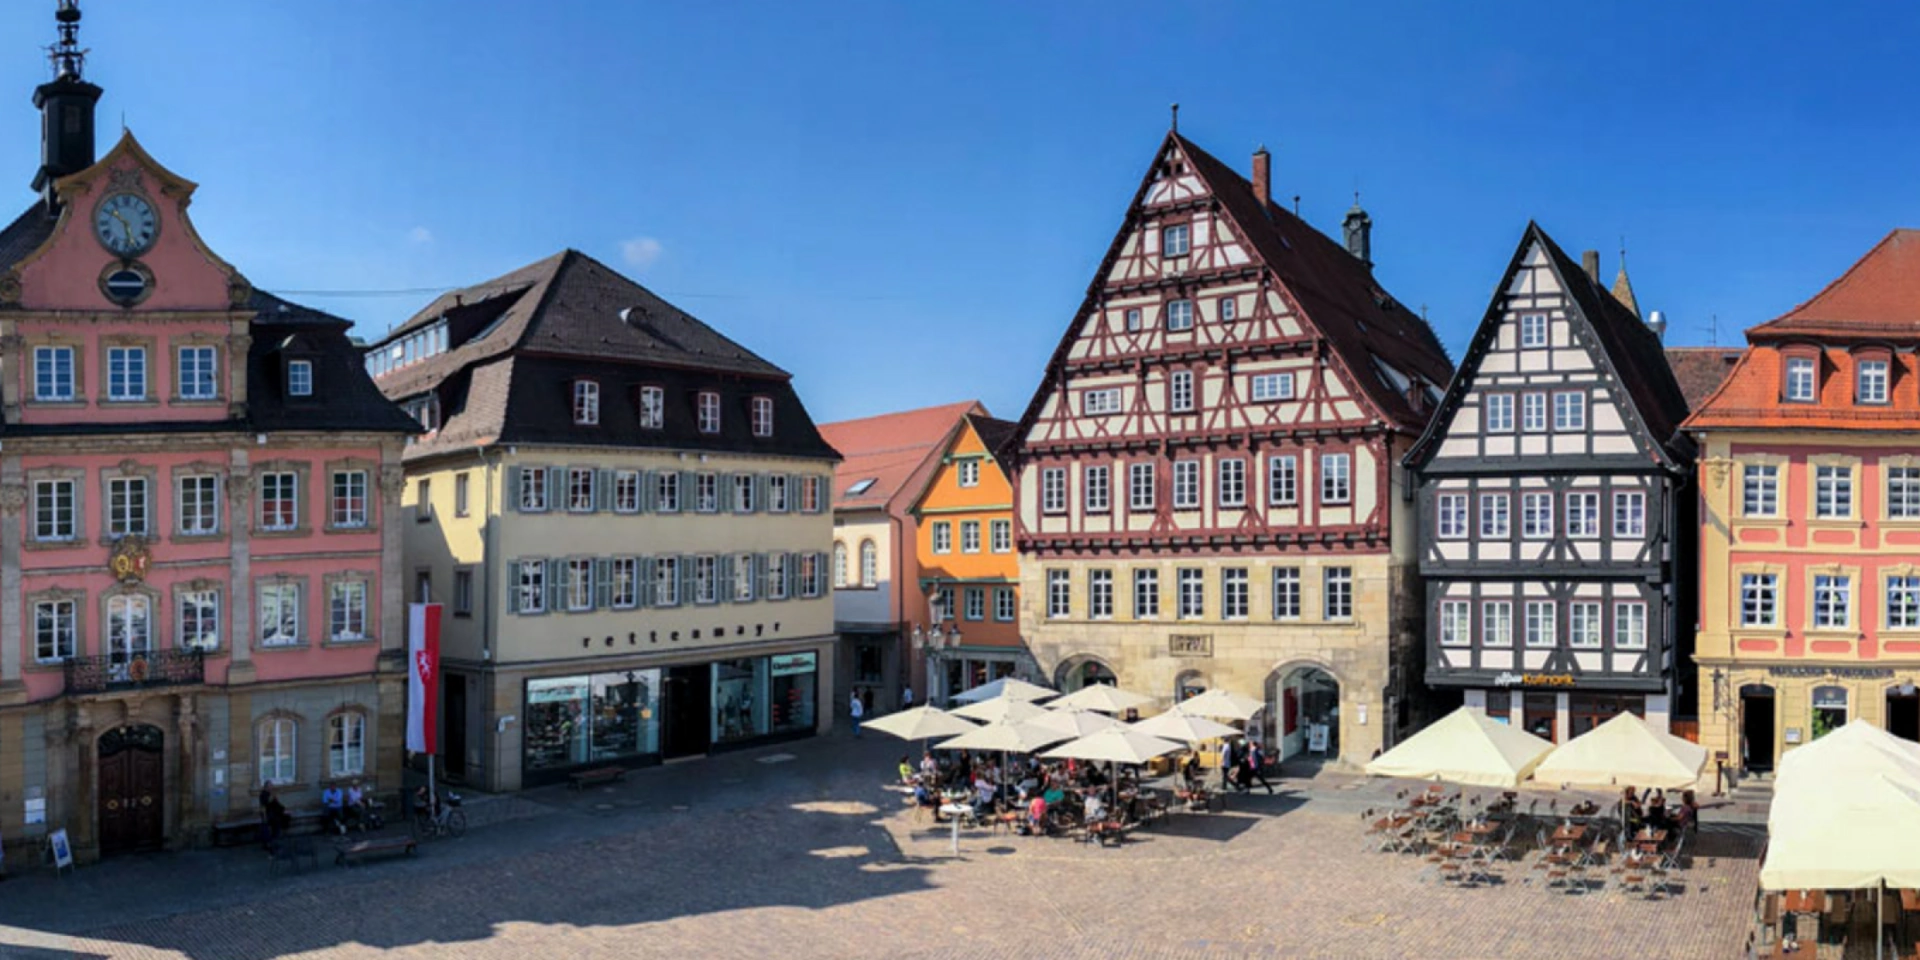 Photography of old town of the German city Schwäbisch Gmünd